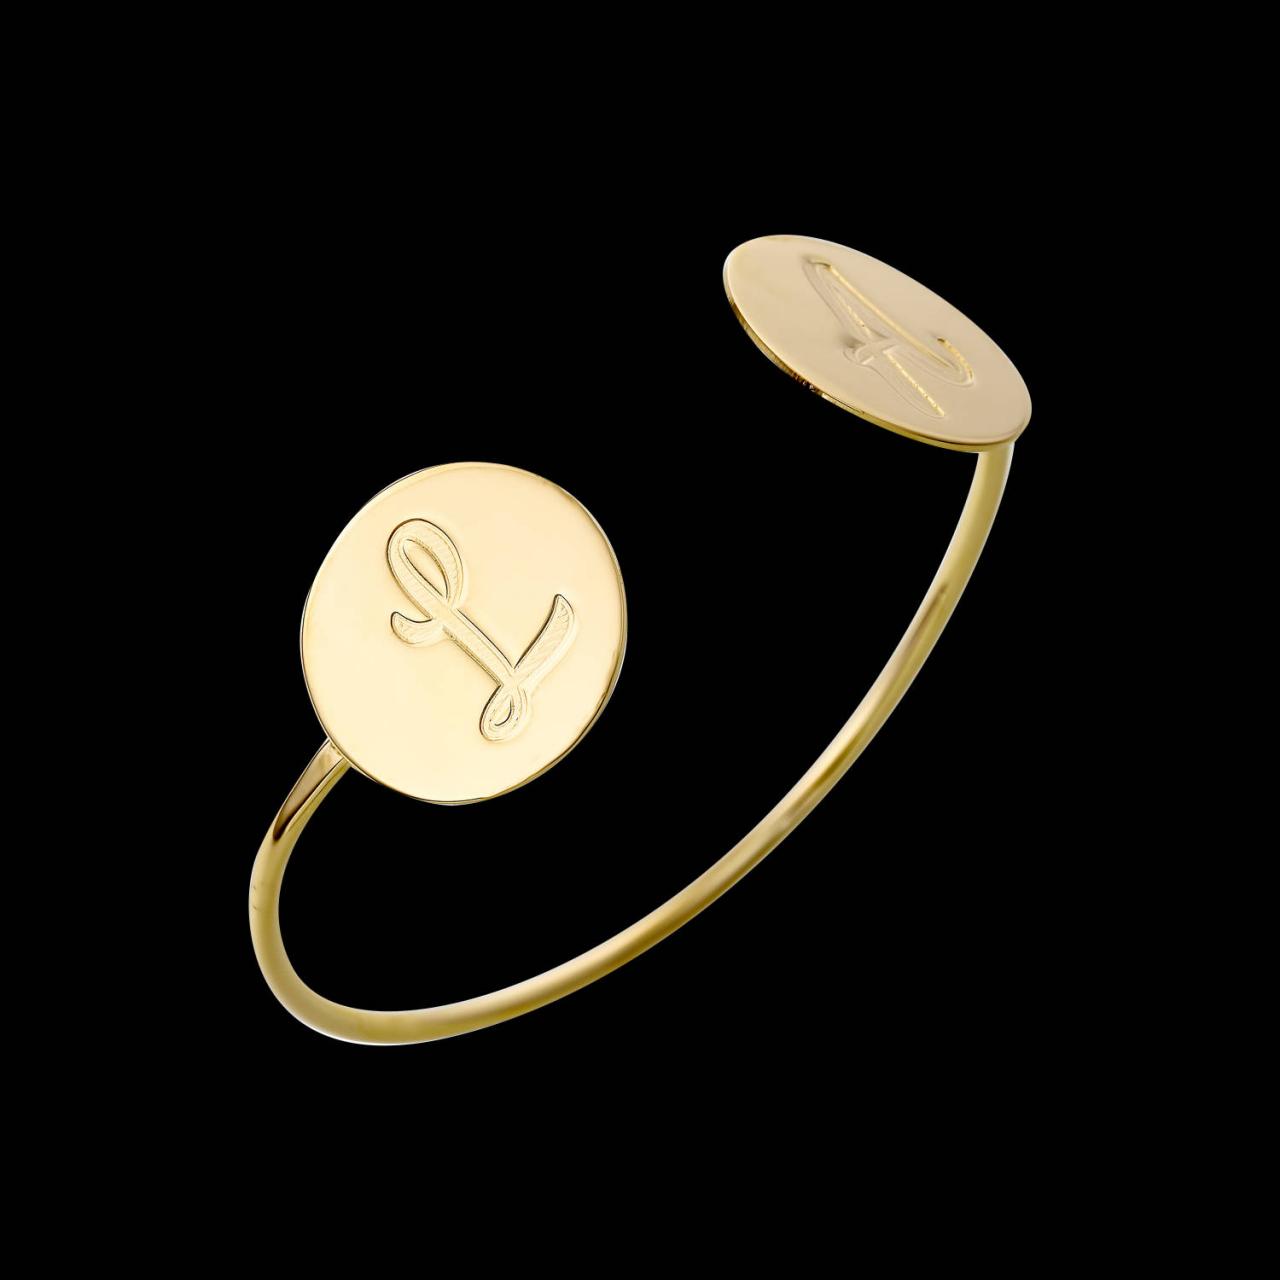 Personalized Bracelet - Custom Bracelet - Engraved Bracelet - Personalized Jewelry - Personalized Gift - Personalized Initials Bracelet - Gold